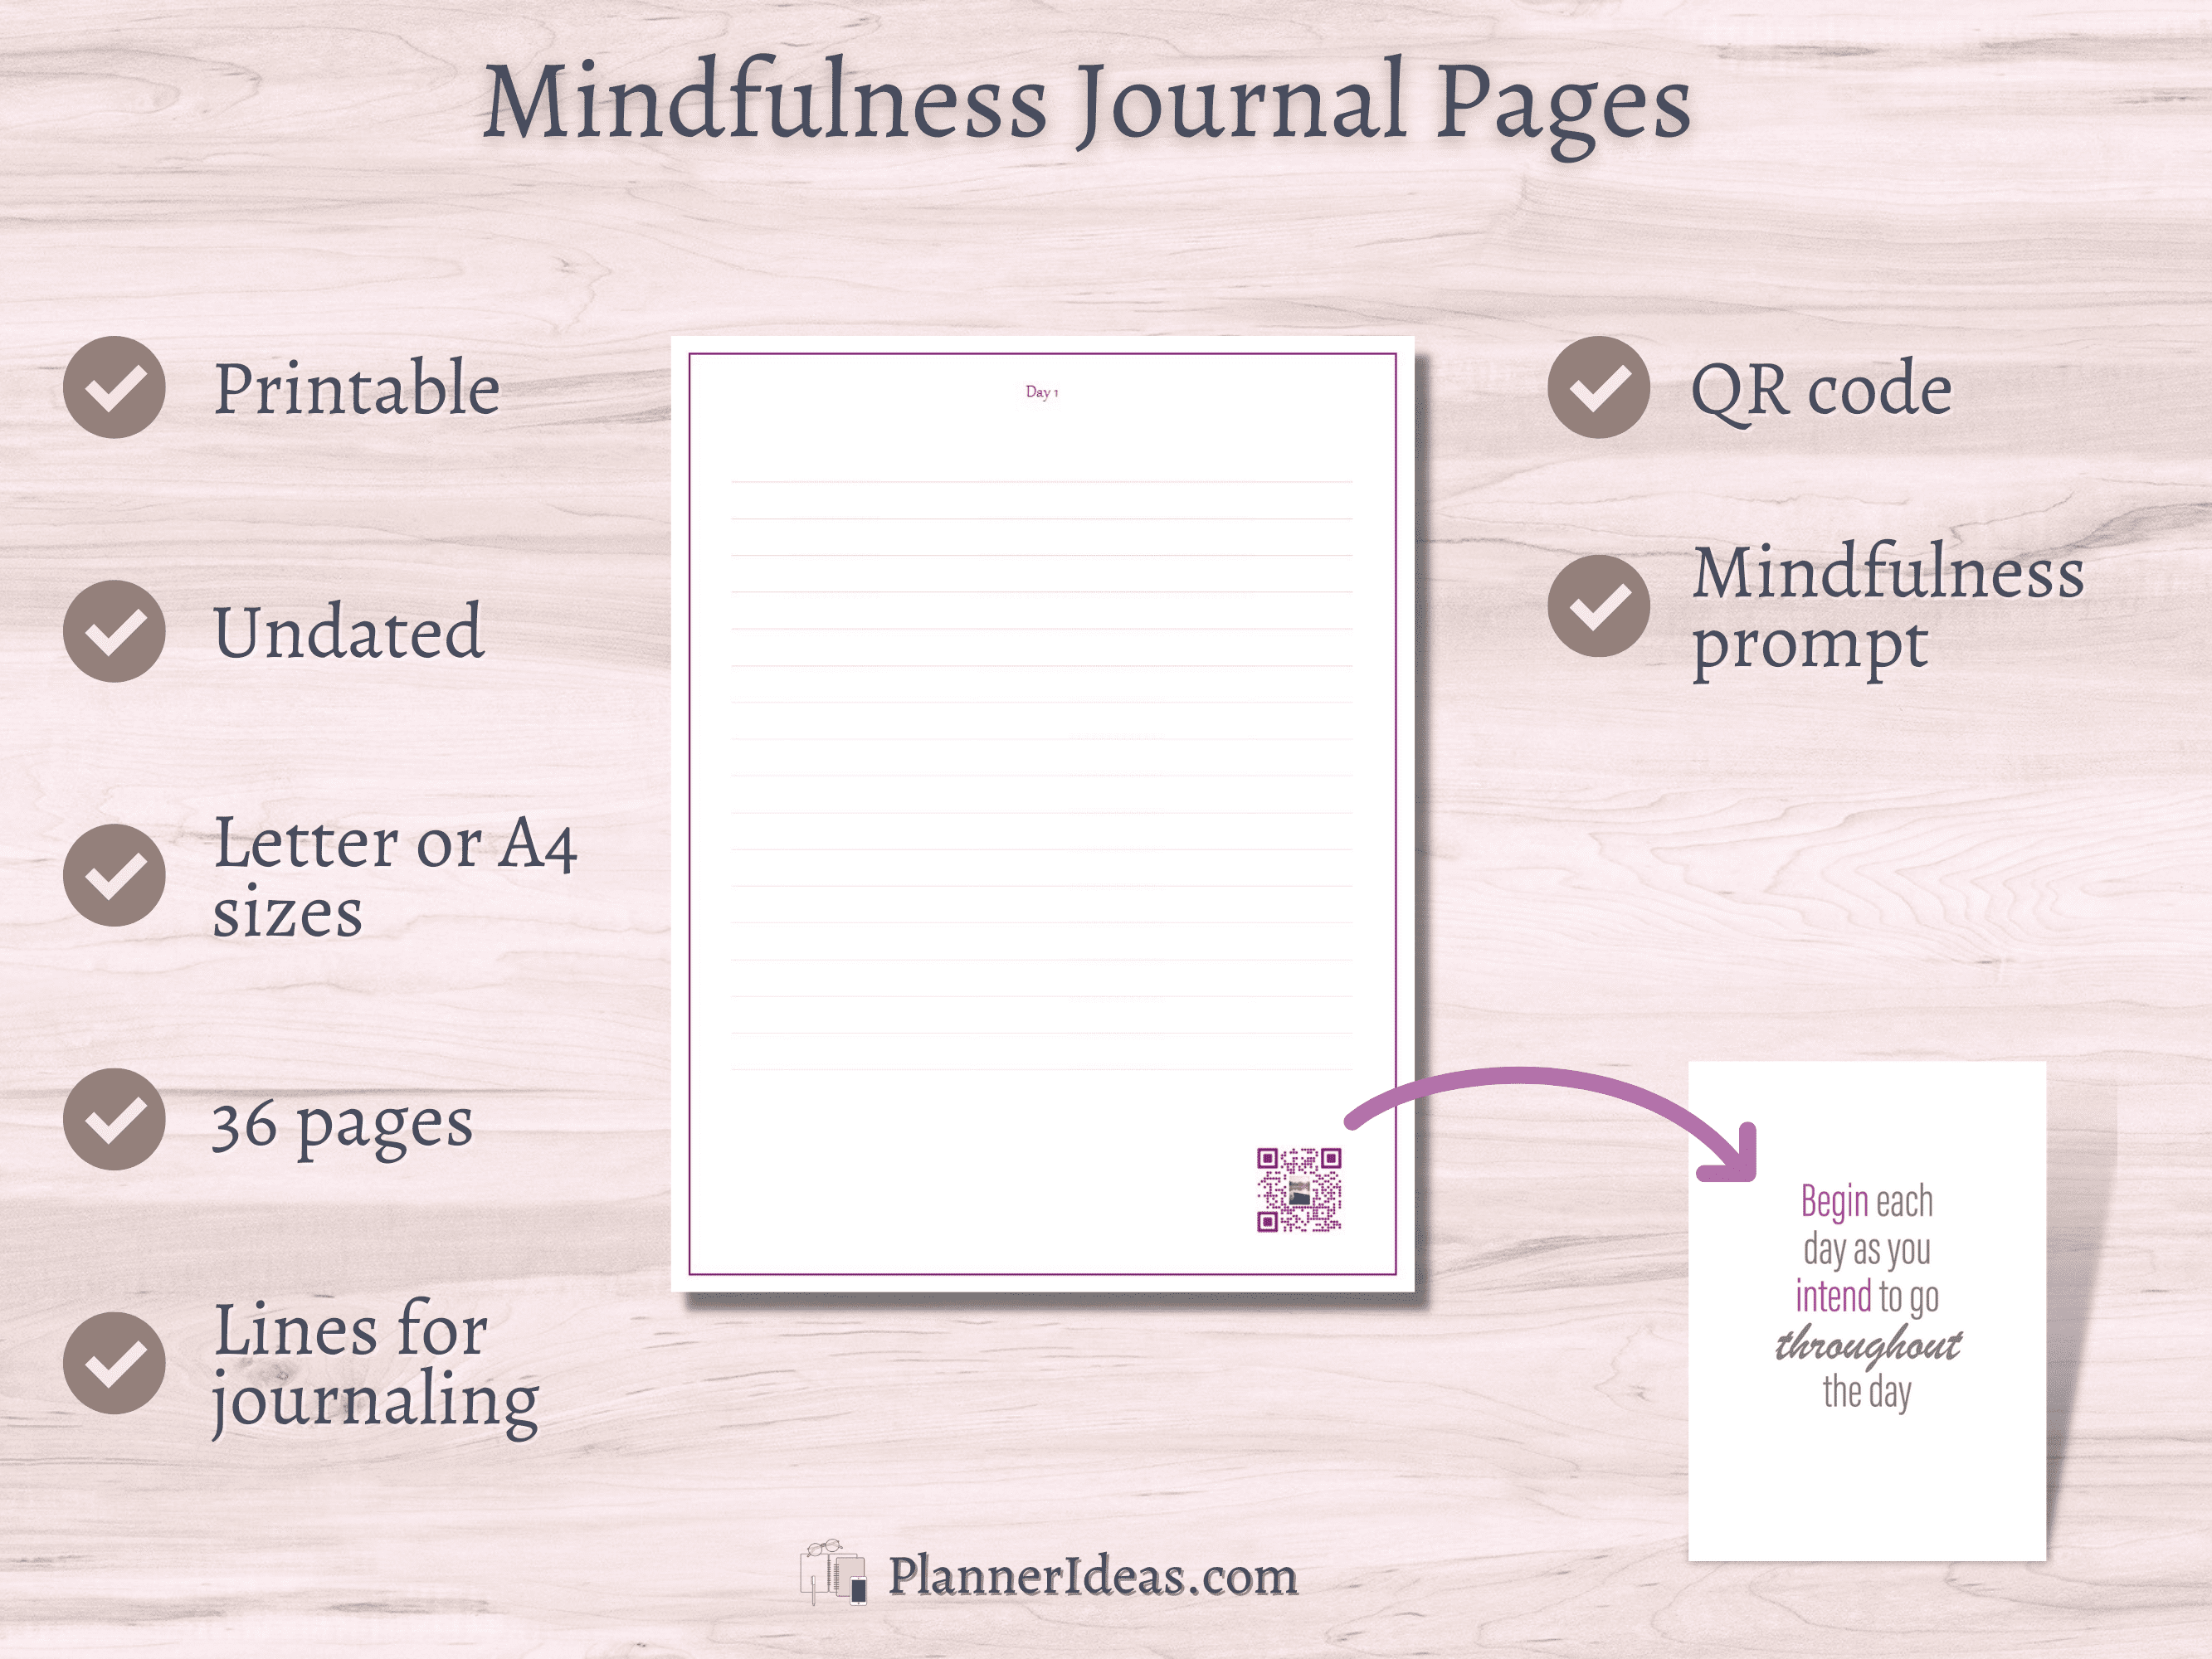 QRcode Mindfulness Journal